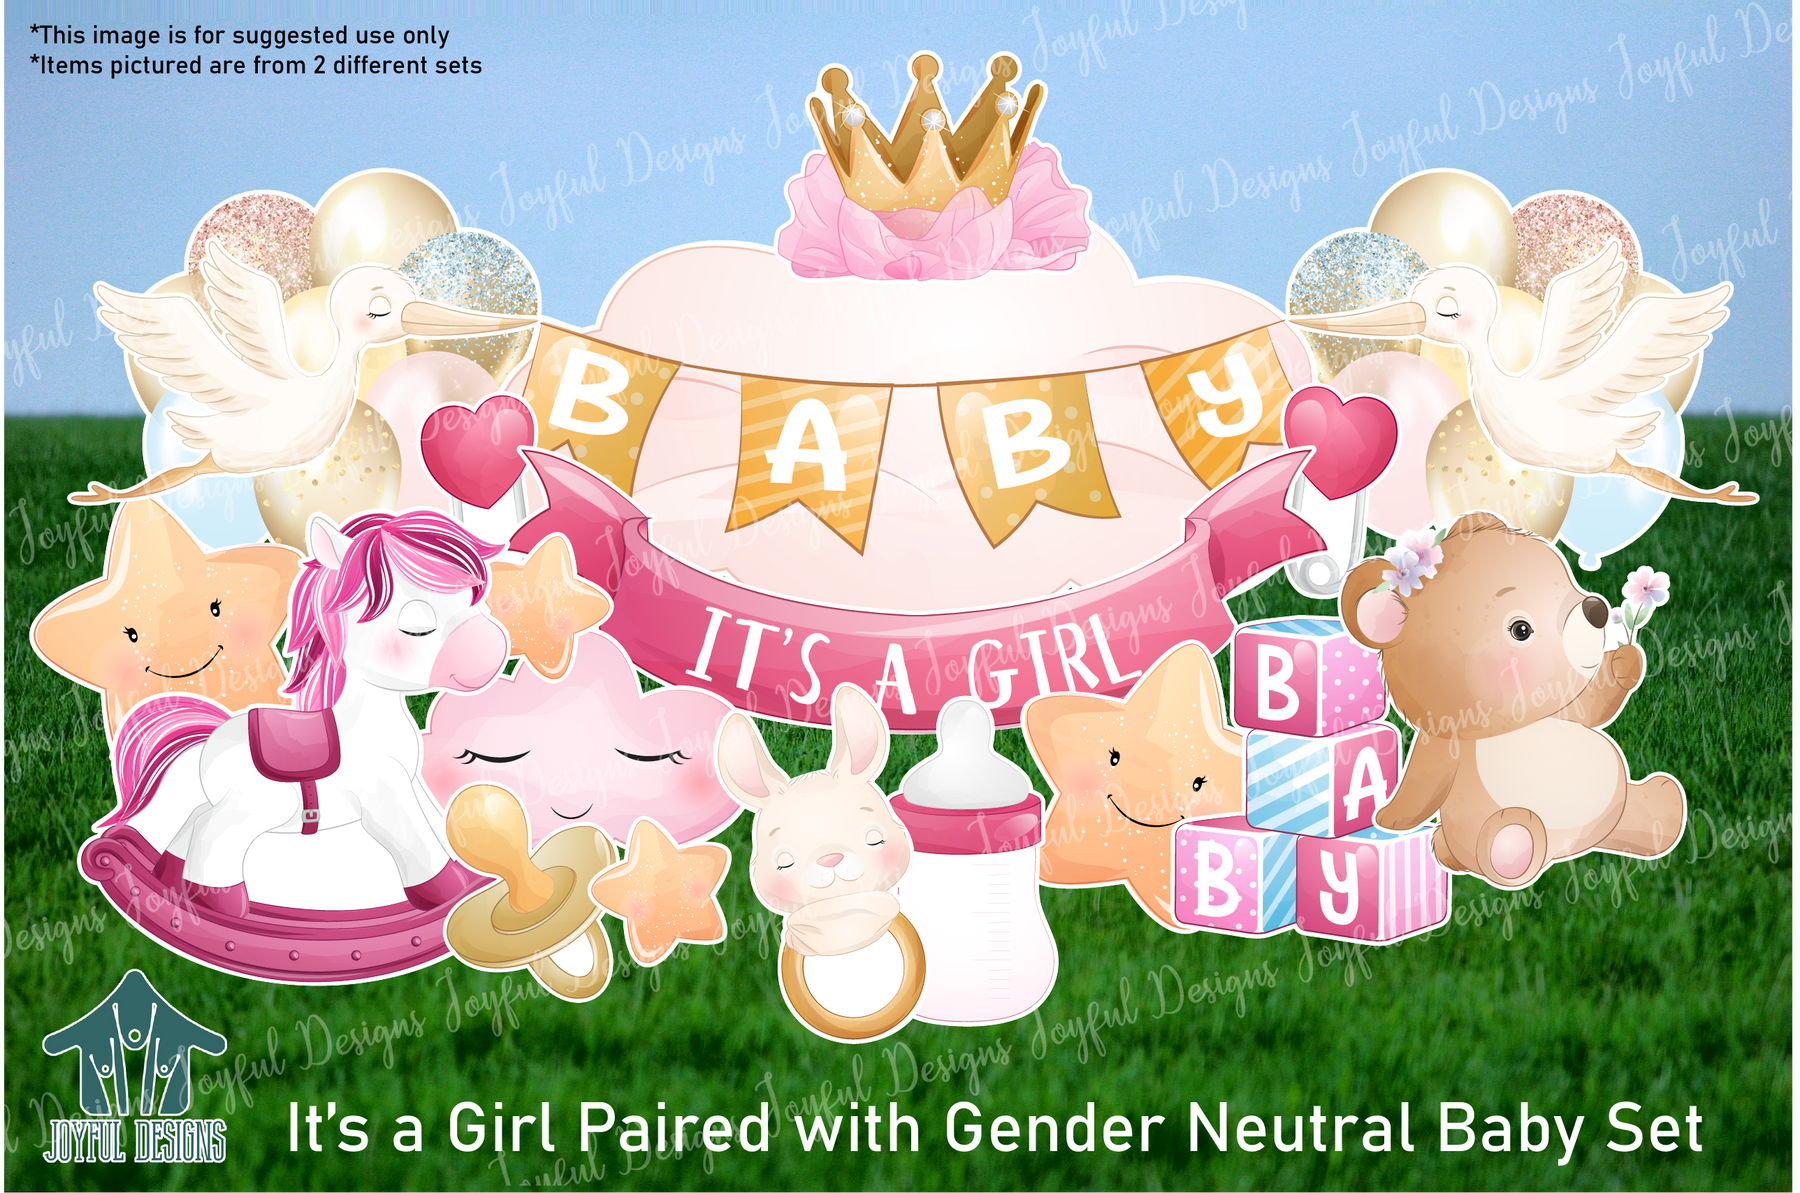 It's a Boy/It's a Girl Baby Banner & Flair Theme Set